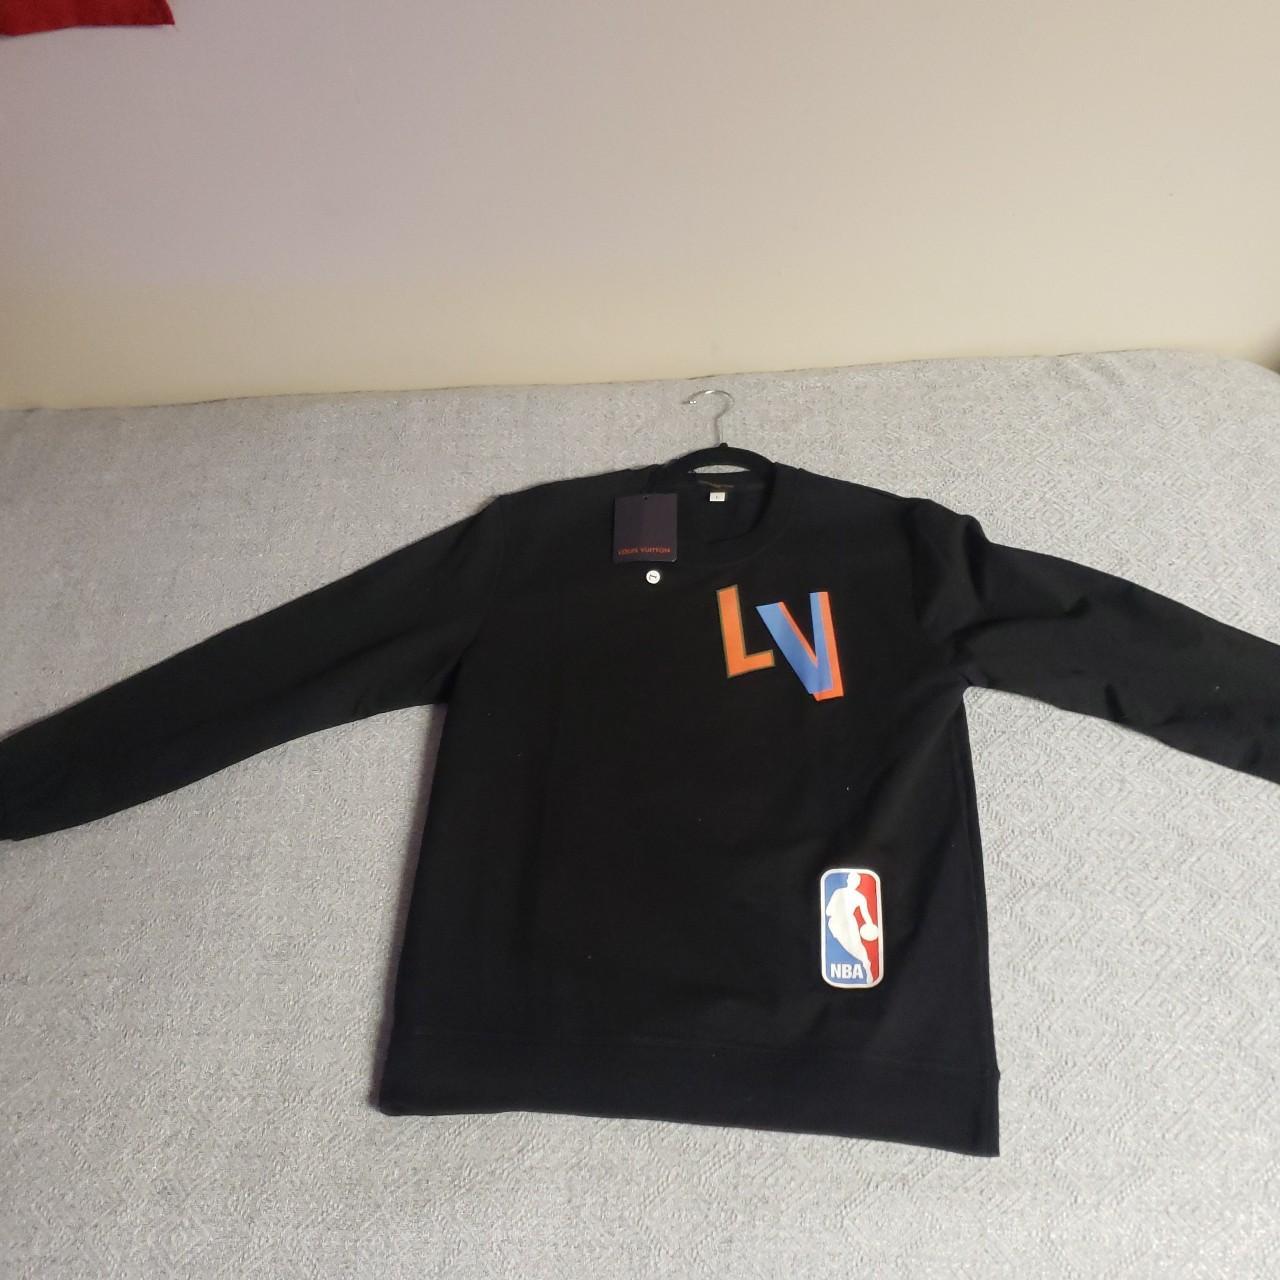 Louis Vuitton X NBA, Longsleeve limited edition